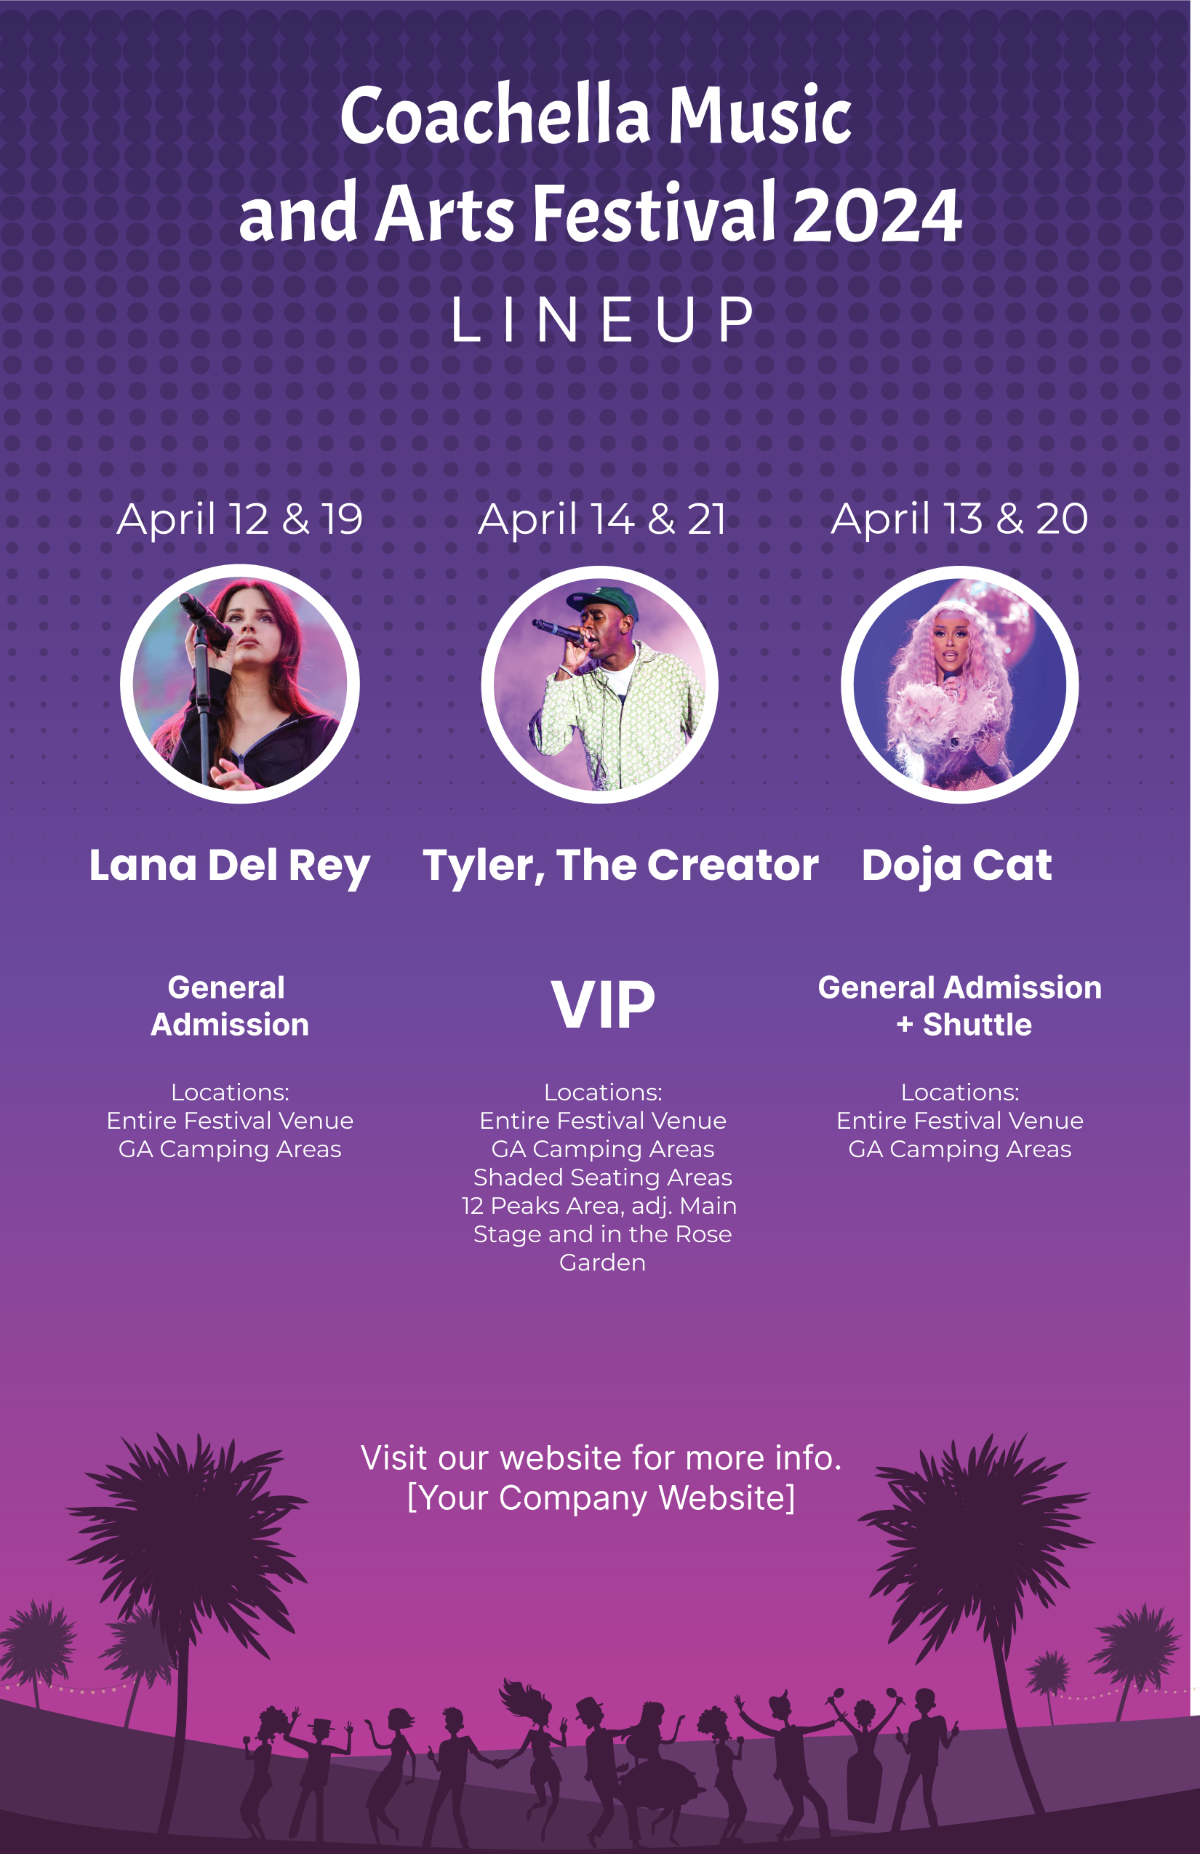 Coachella Tickets, Lineup & Locations